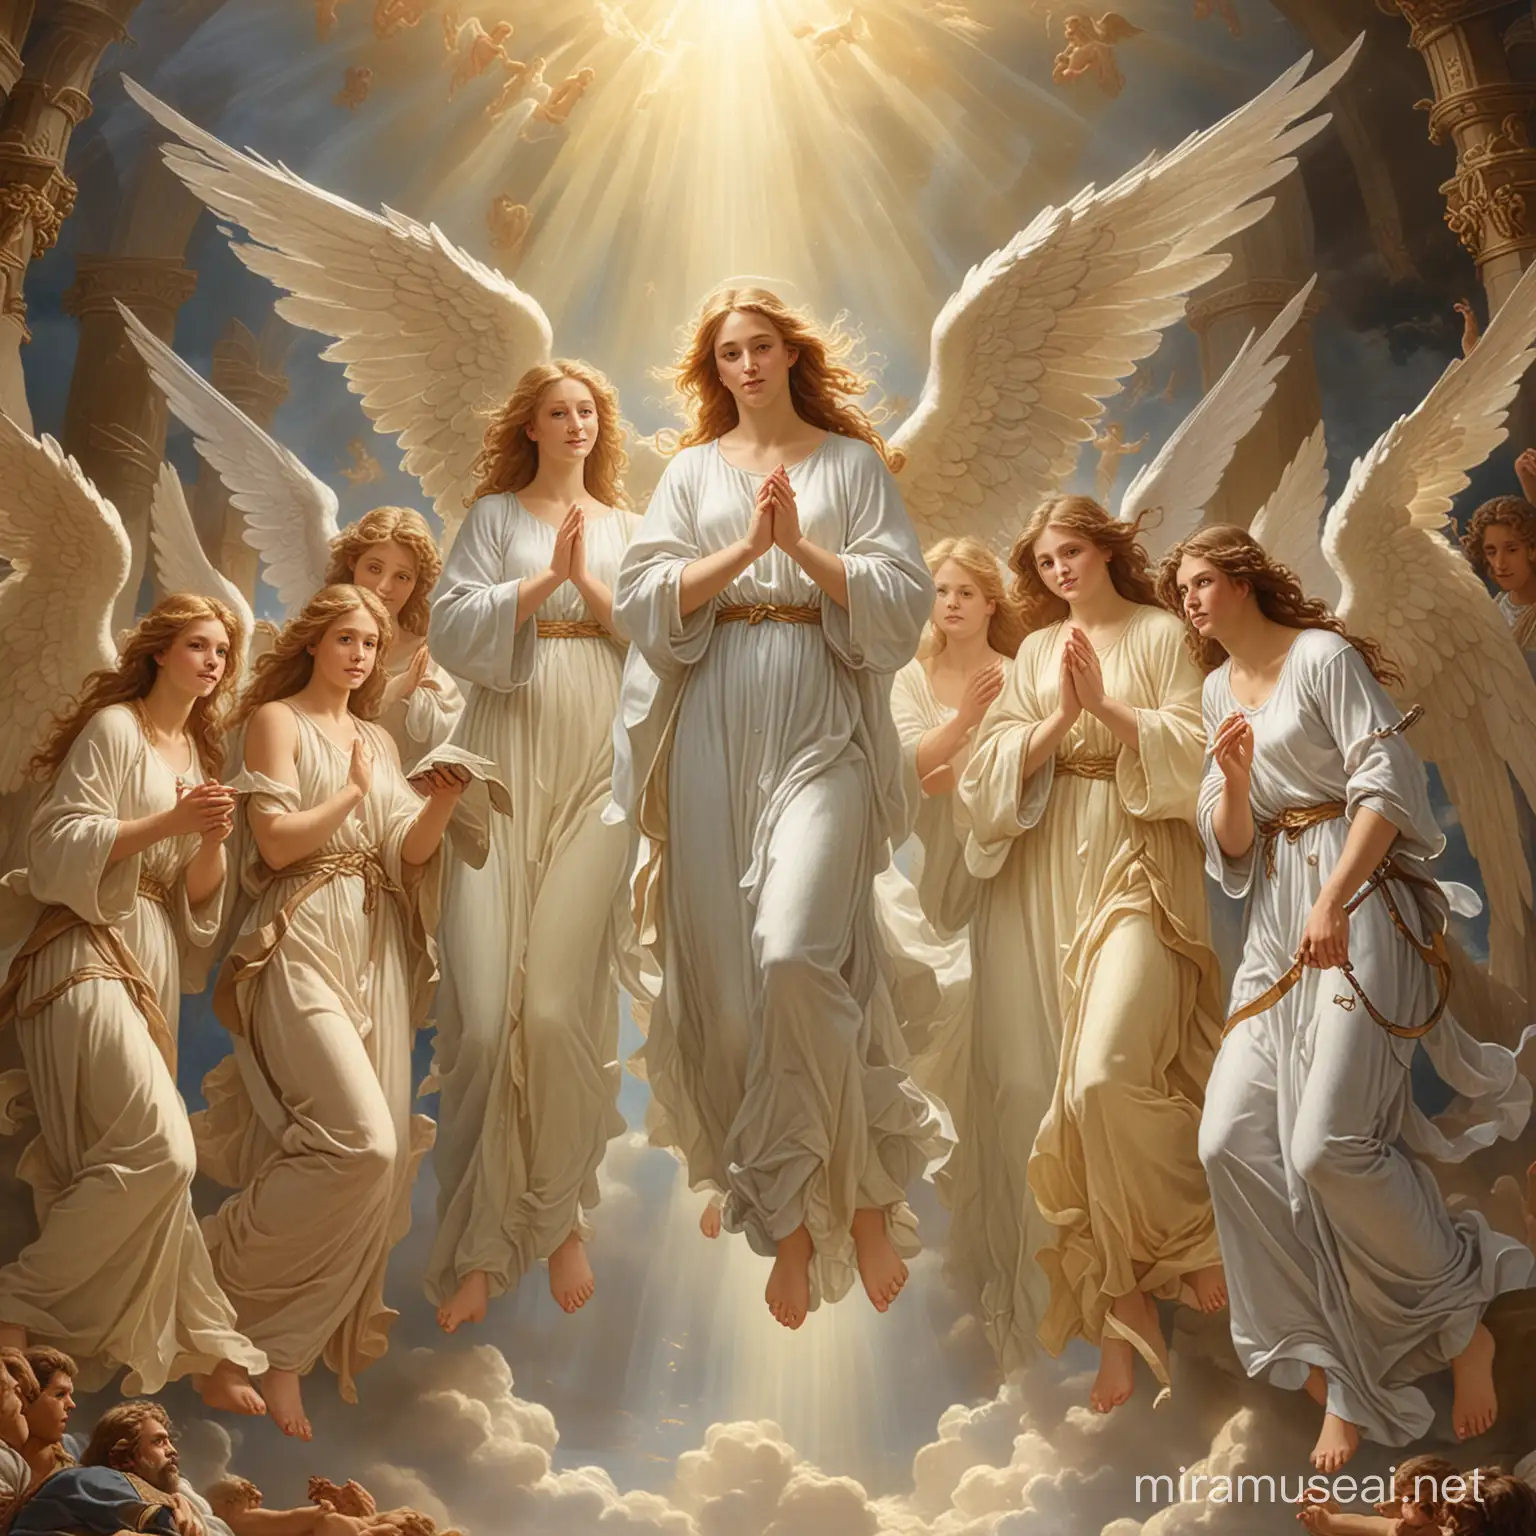 Biblical Depiction of Angels in Heaven